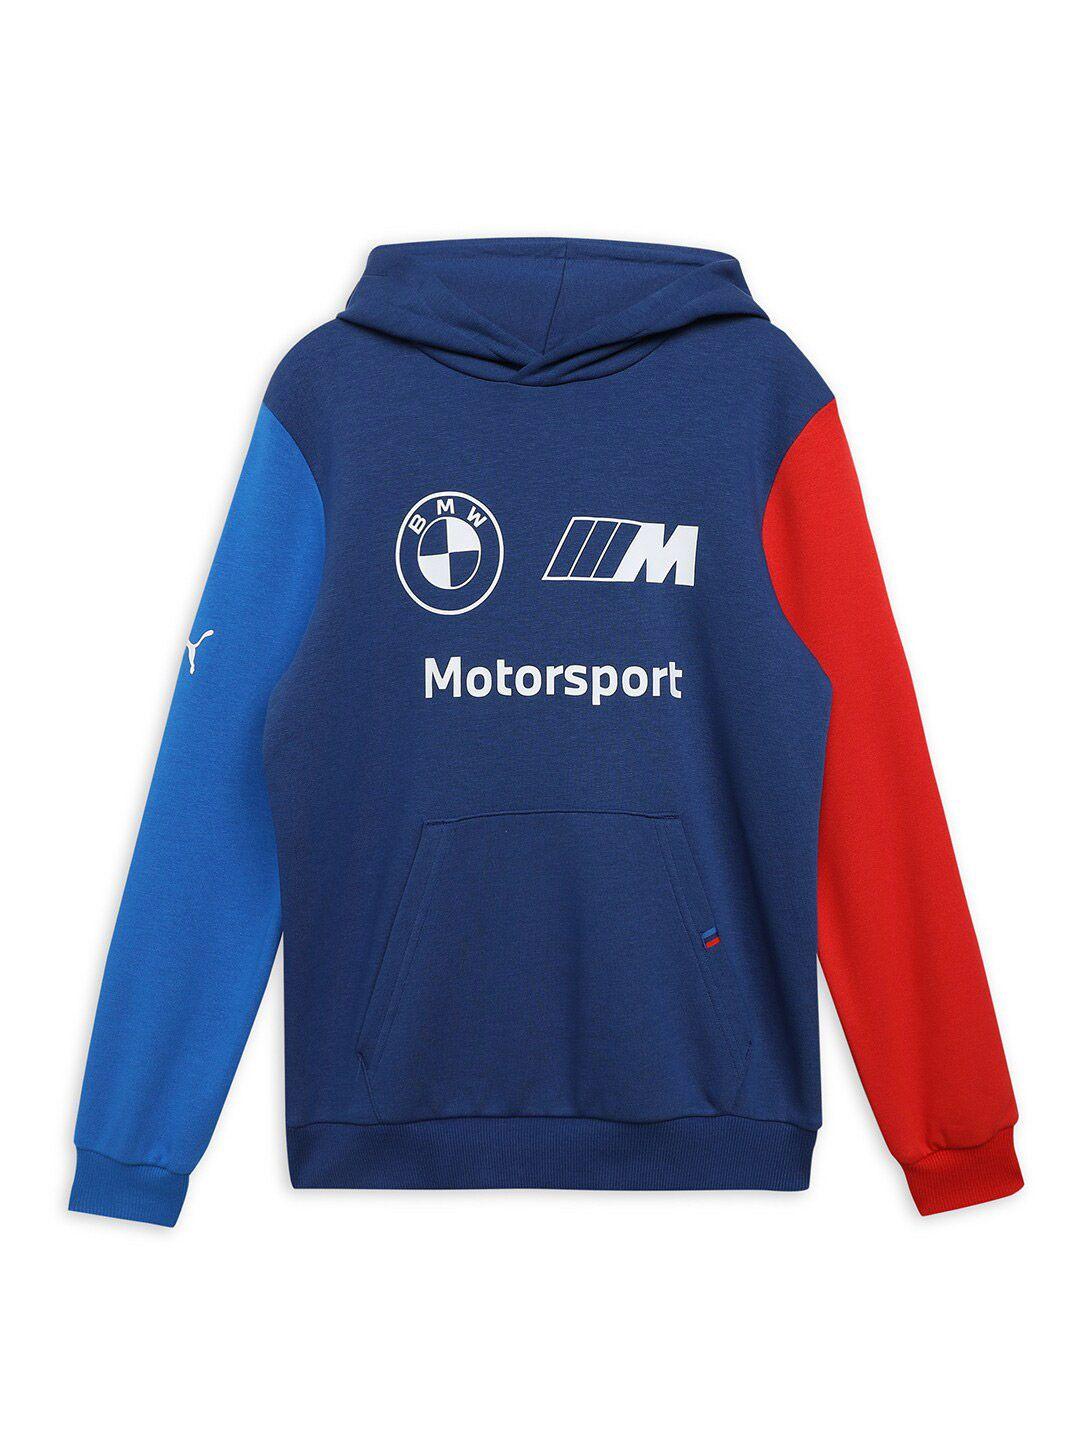 puma motorsport kids blue sweatshirt